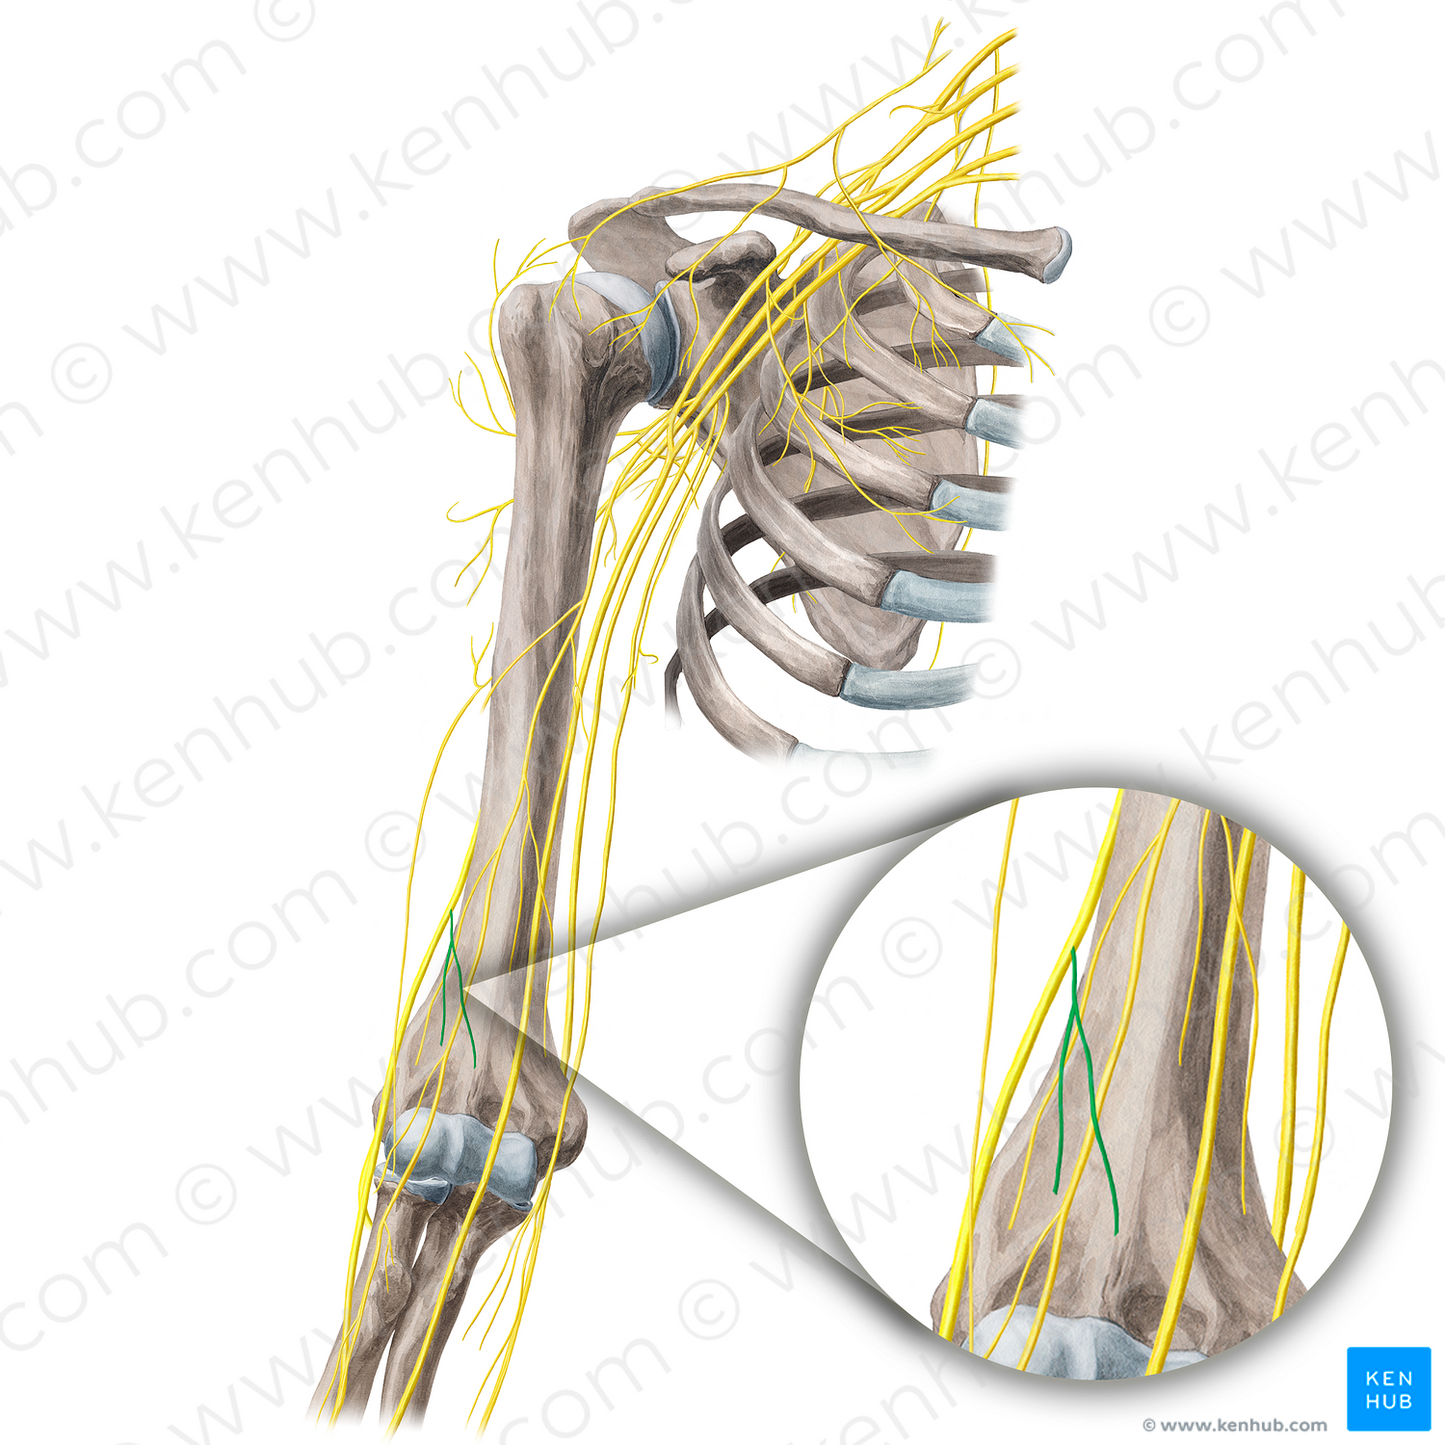 Posterior antebrachial cutaneous nerve (#21669)